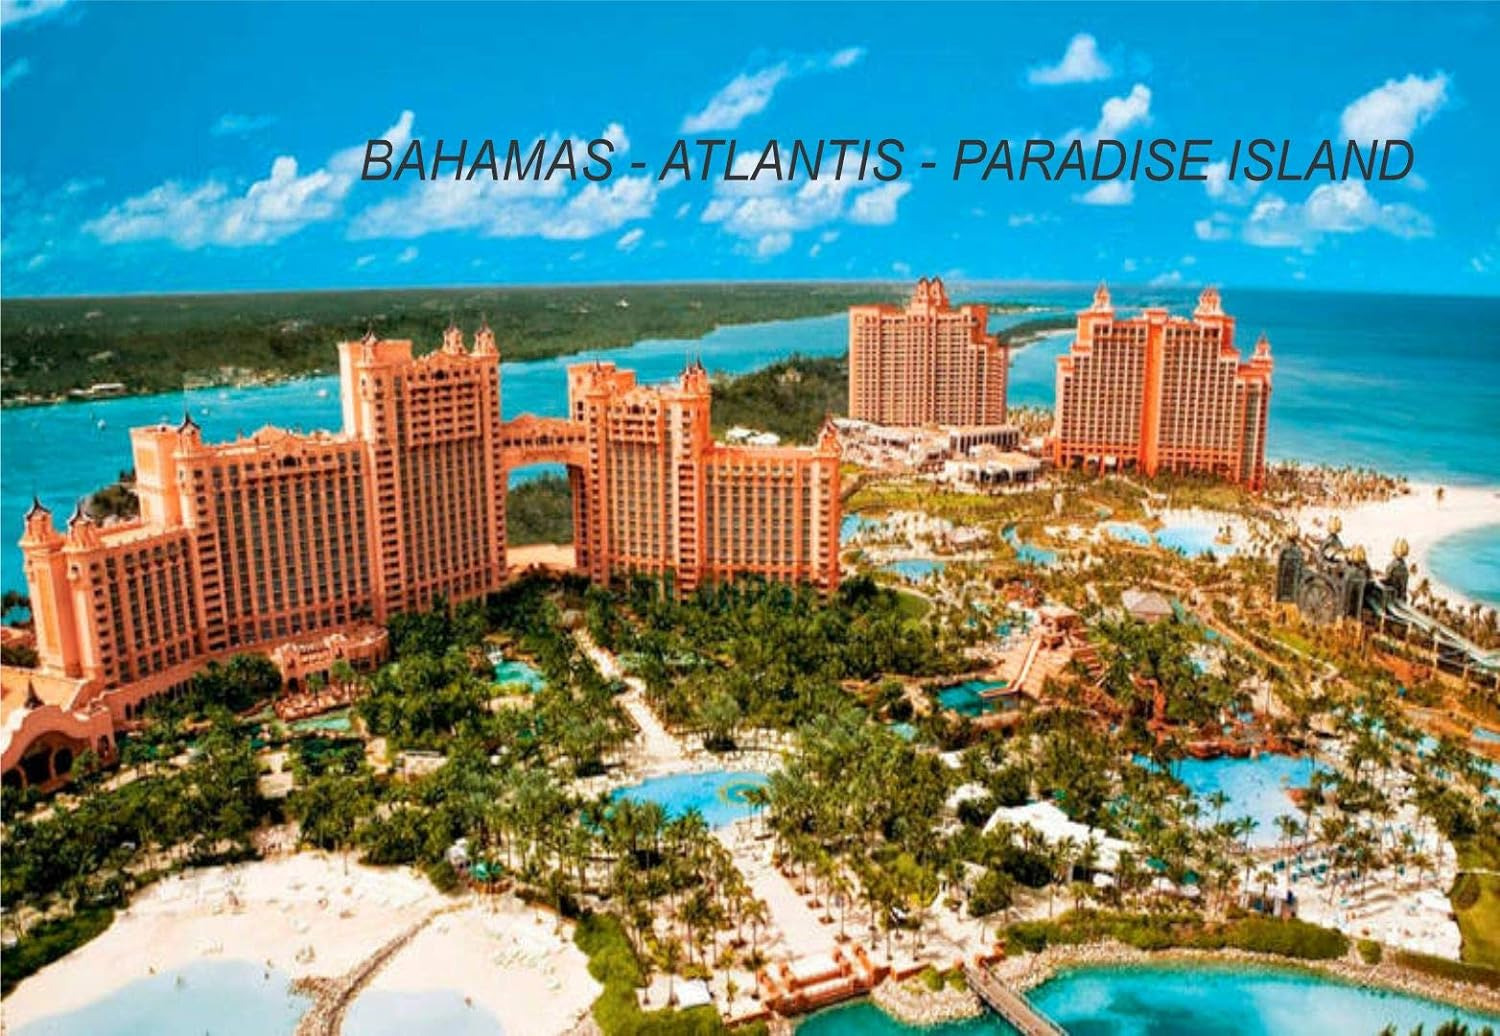 Bahamas Bahamian Fridge Refrigerator Magnets (12 Piece, Style: Atlantis Paradise